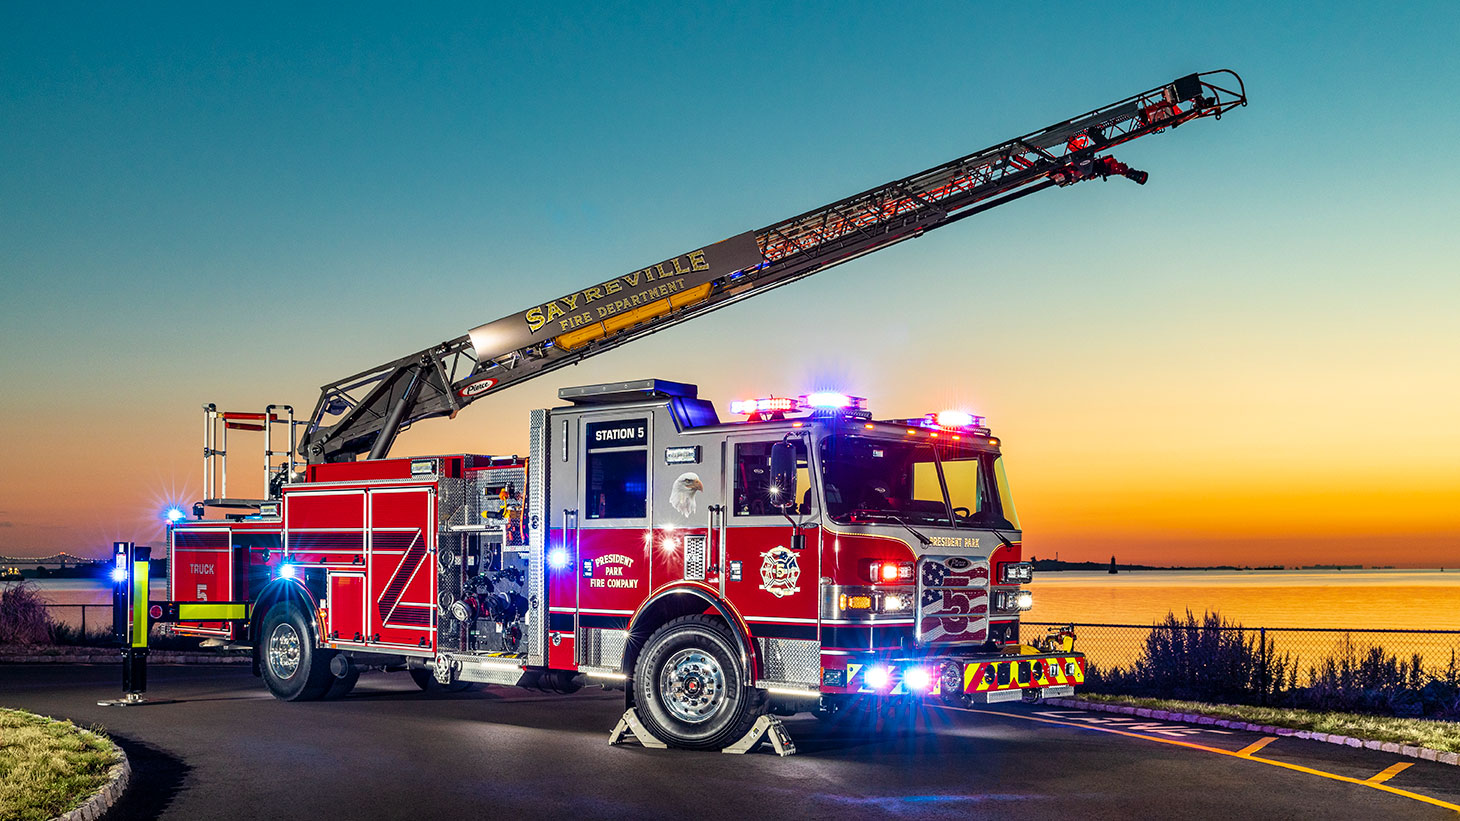 Sayreville Fire Deparment 75 Aerial Ladder Extended in Sunset